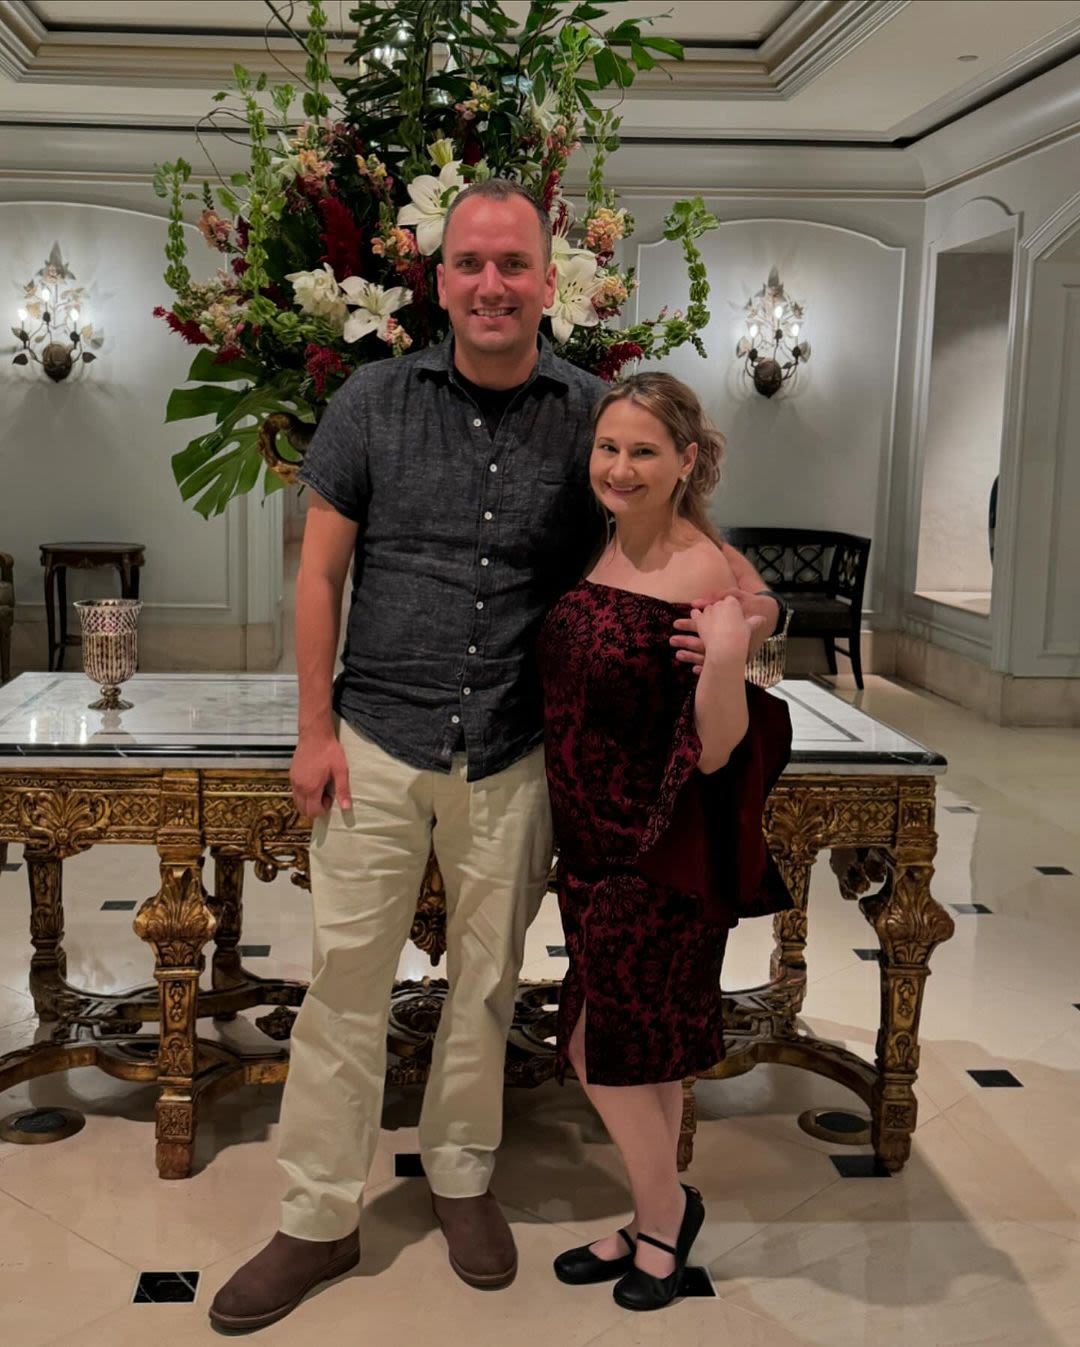 Gypsy Rose Blanchard Celebrates 33rd Birthday on Date Night With Ken Urker Amid Pregnancy